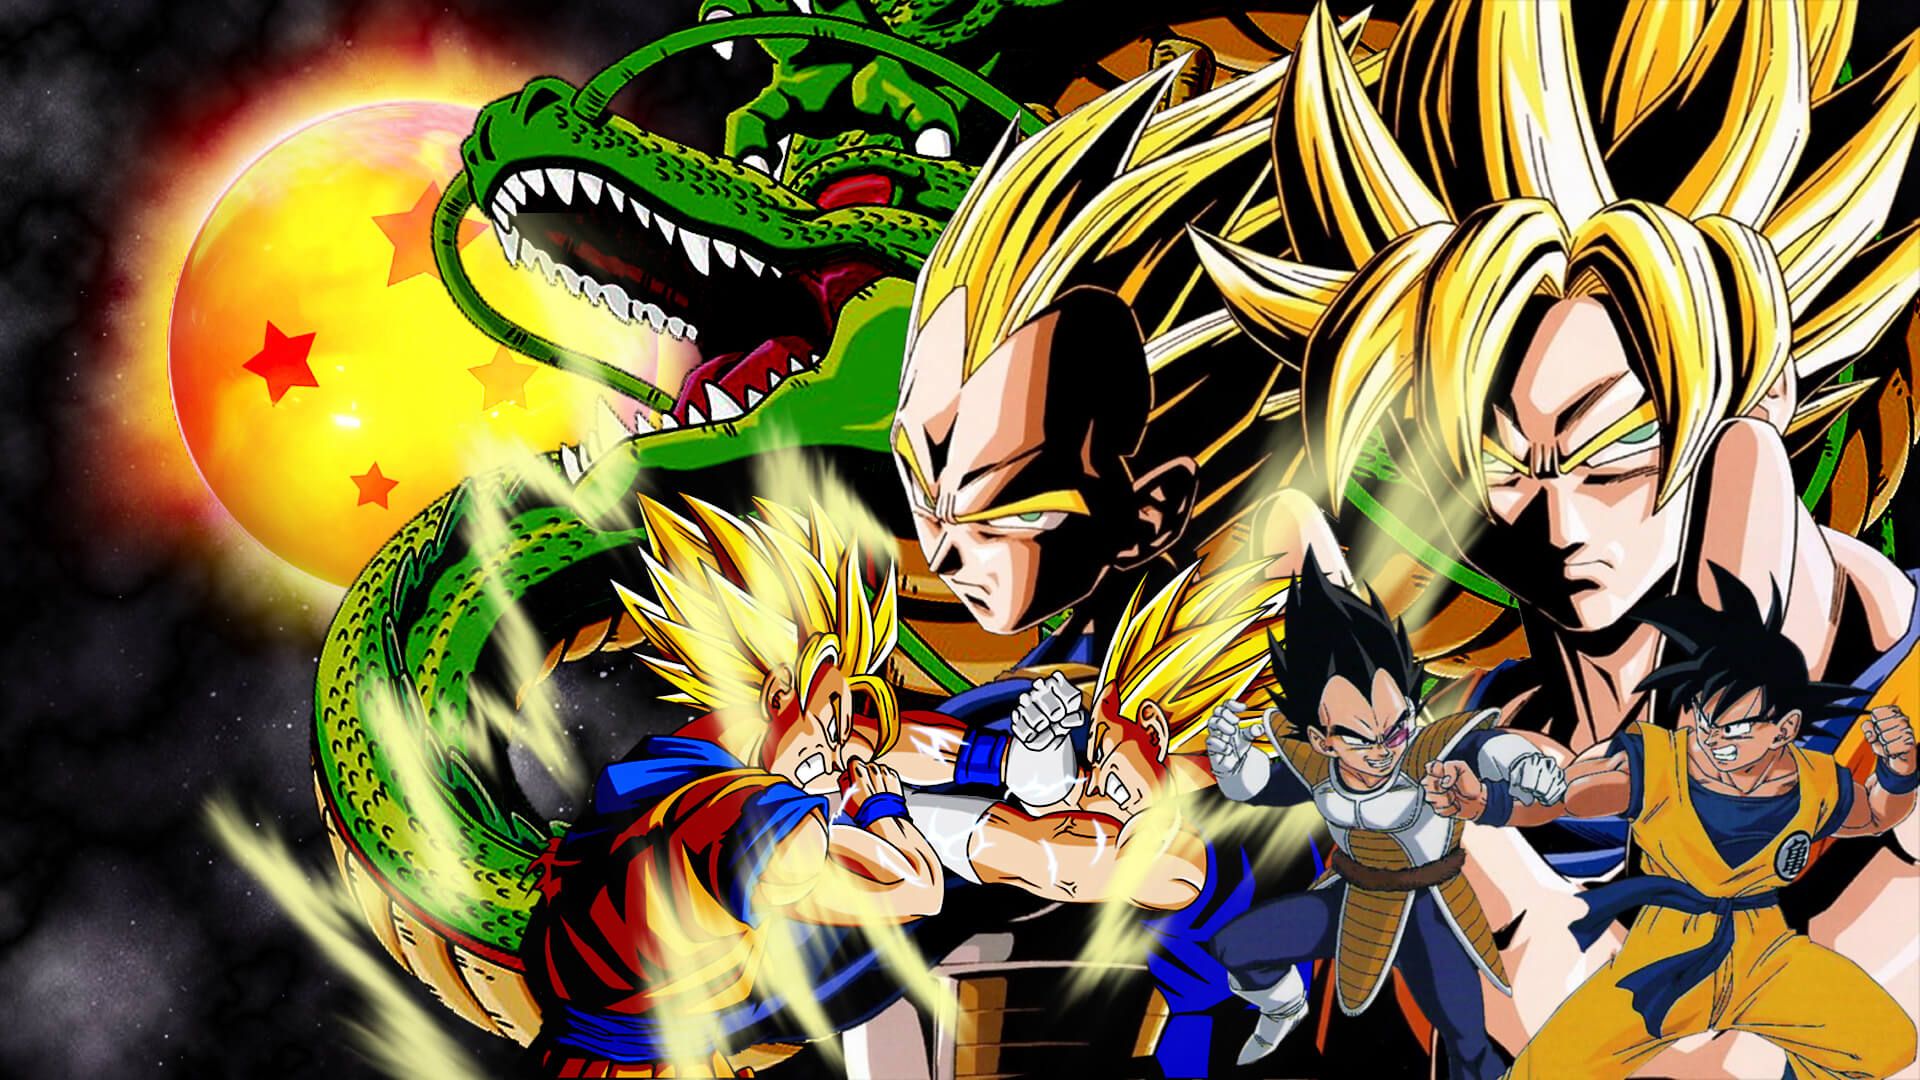 Goku vs vegeta wallpaper wallpaper do goku dragon ball anime